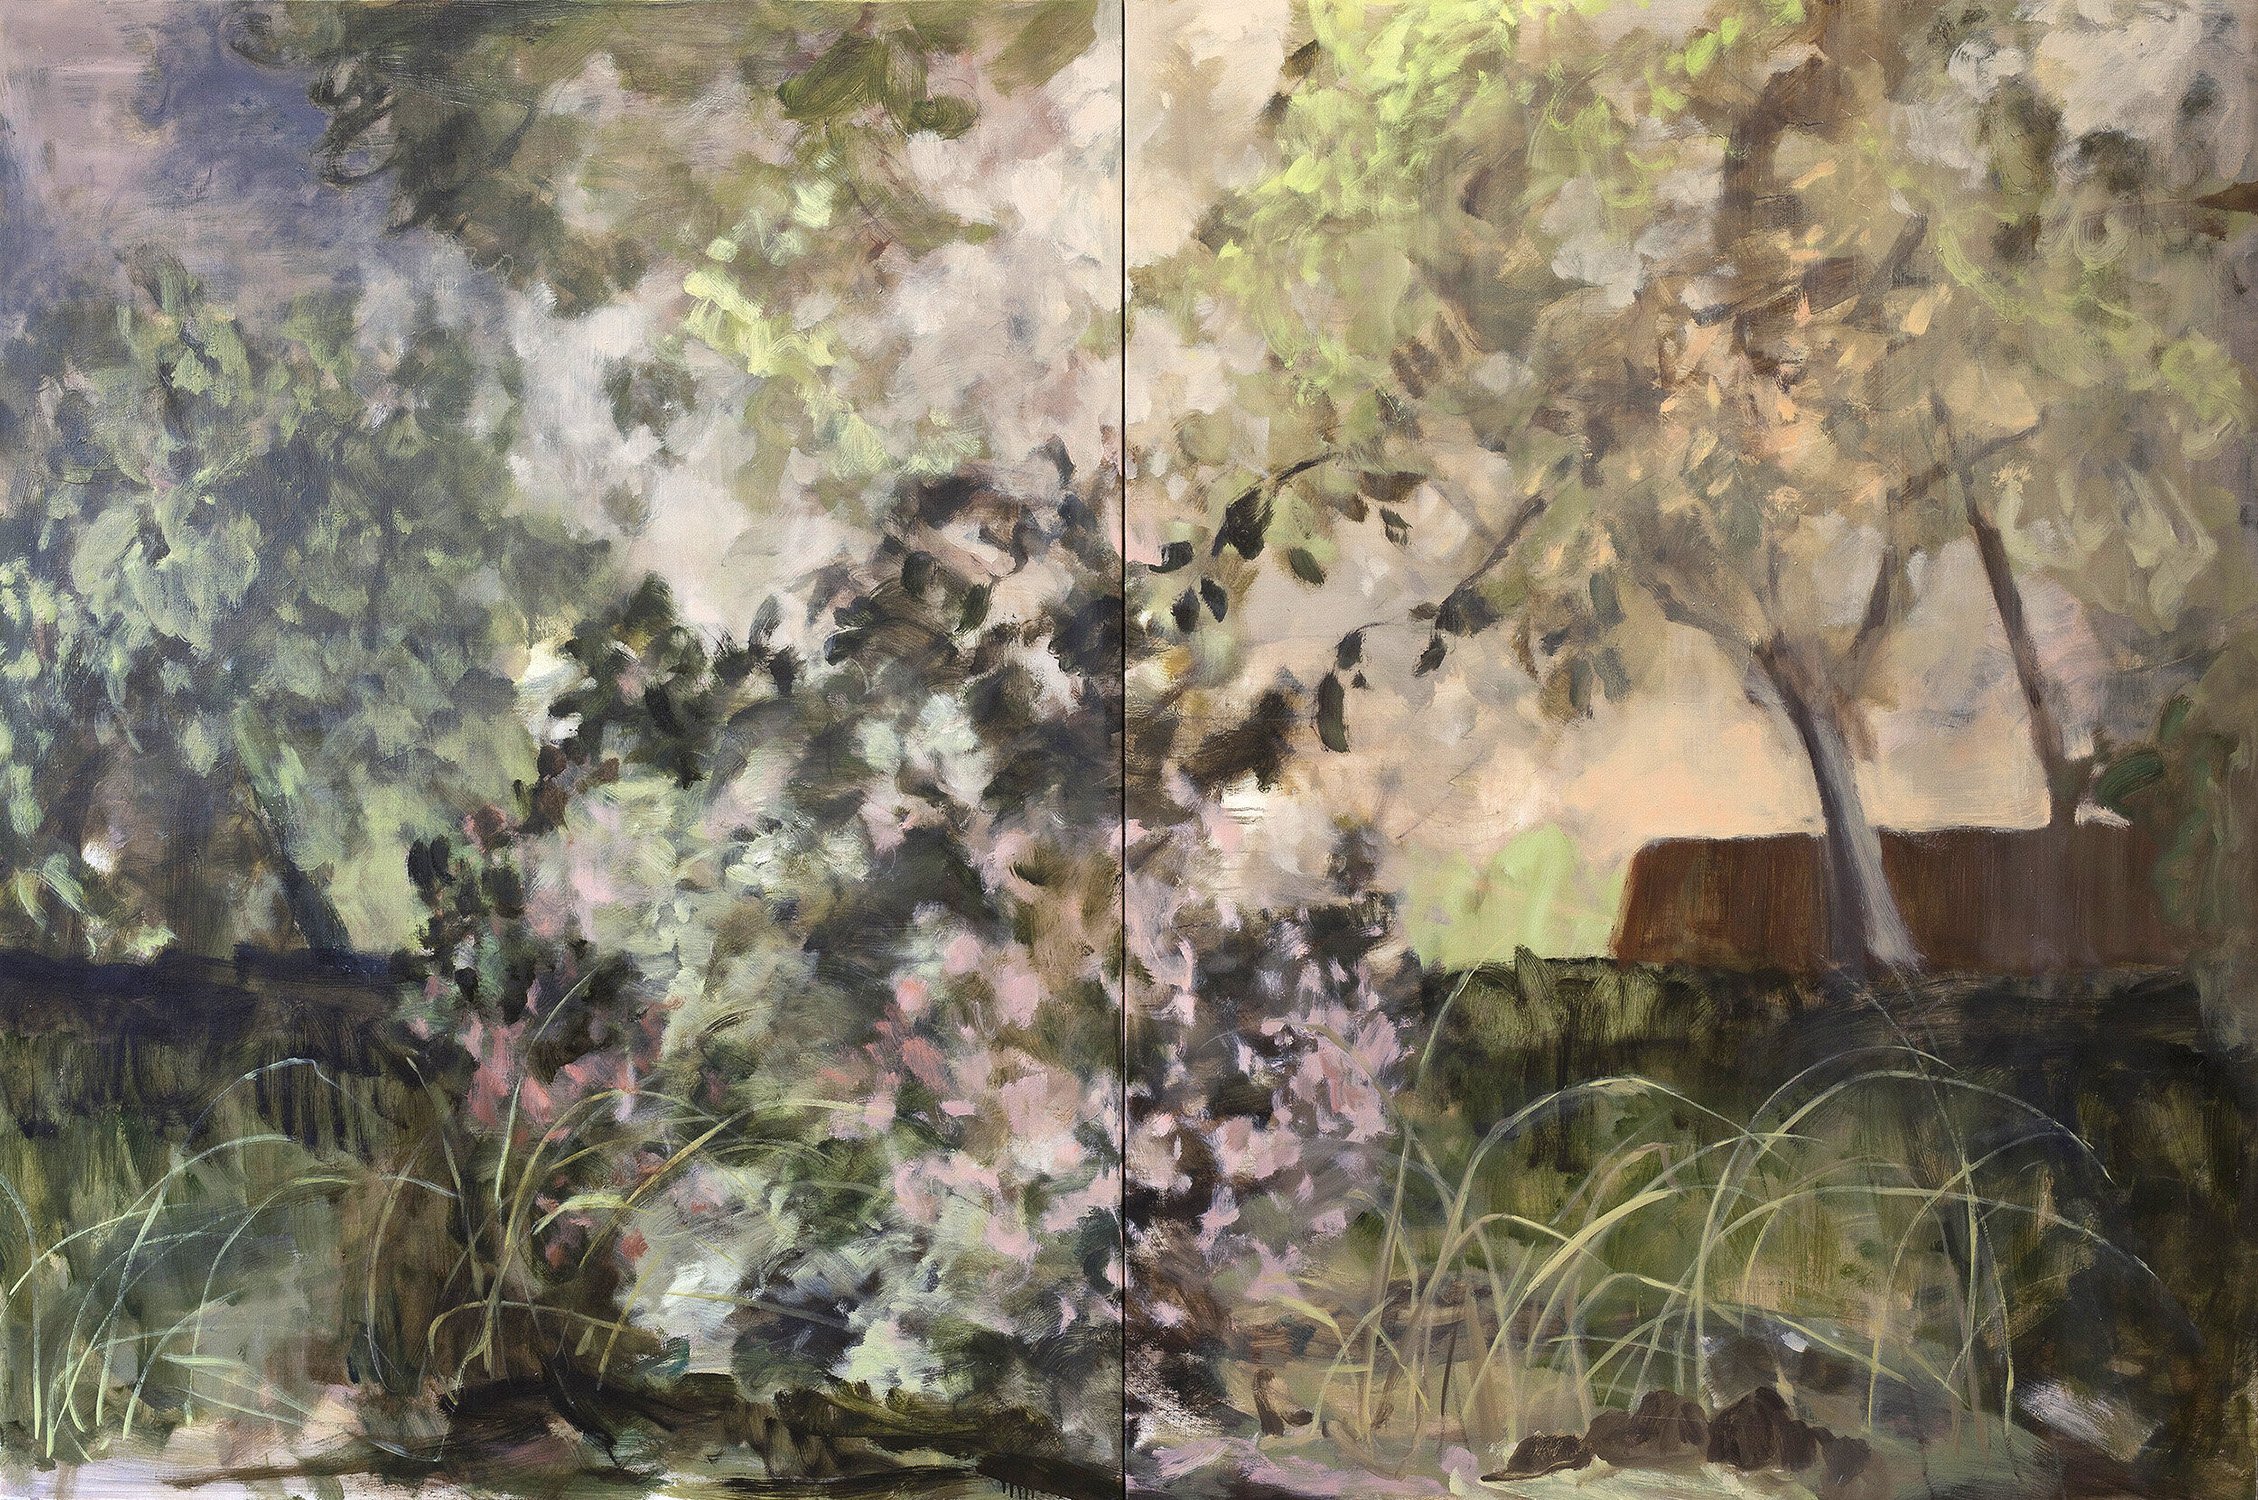   Pink Viburnum,  2020  oil on linen, two panels, total 183 x 275cm 